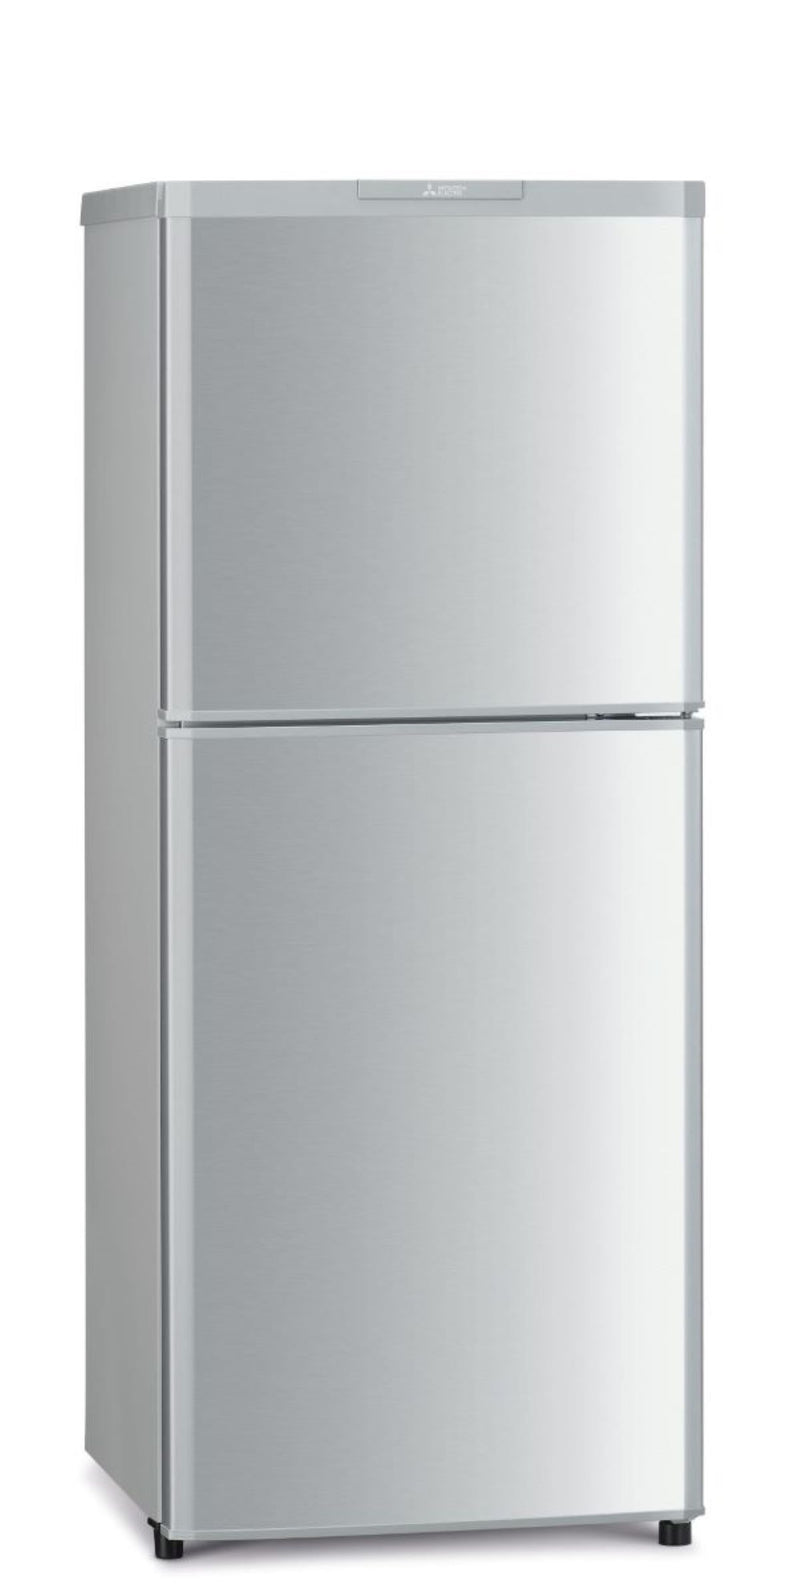 MITSUBISHI MR-H15R-SL-H 2-Door Refrigerator (Sliver) Fridge (includes unpacking and moving appliance service)